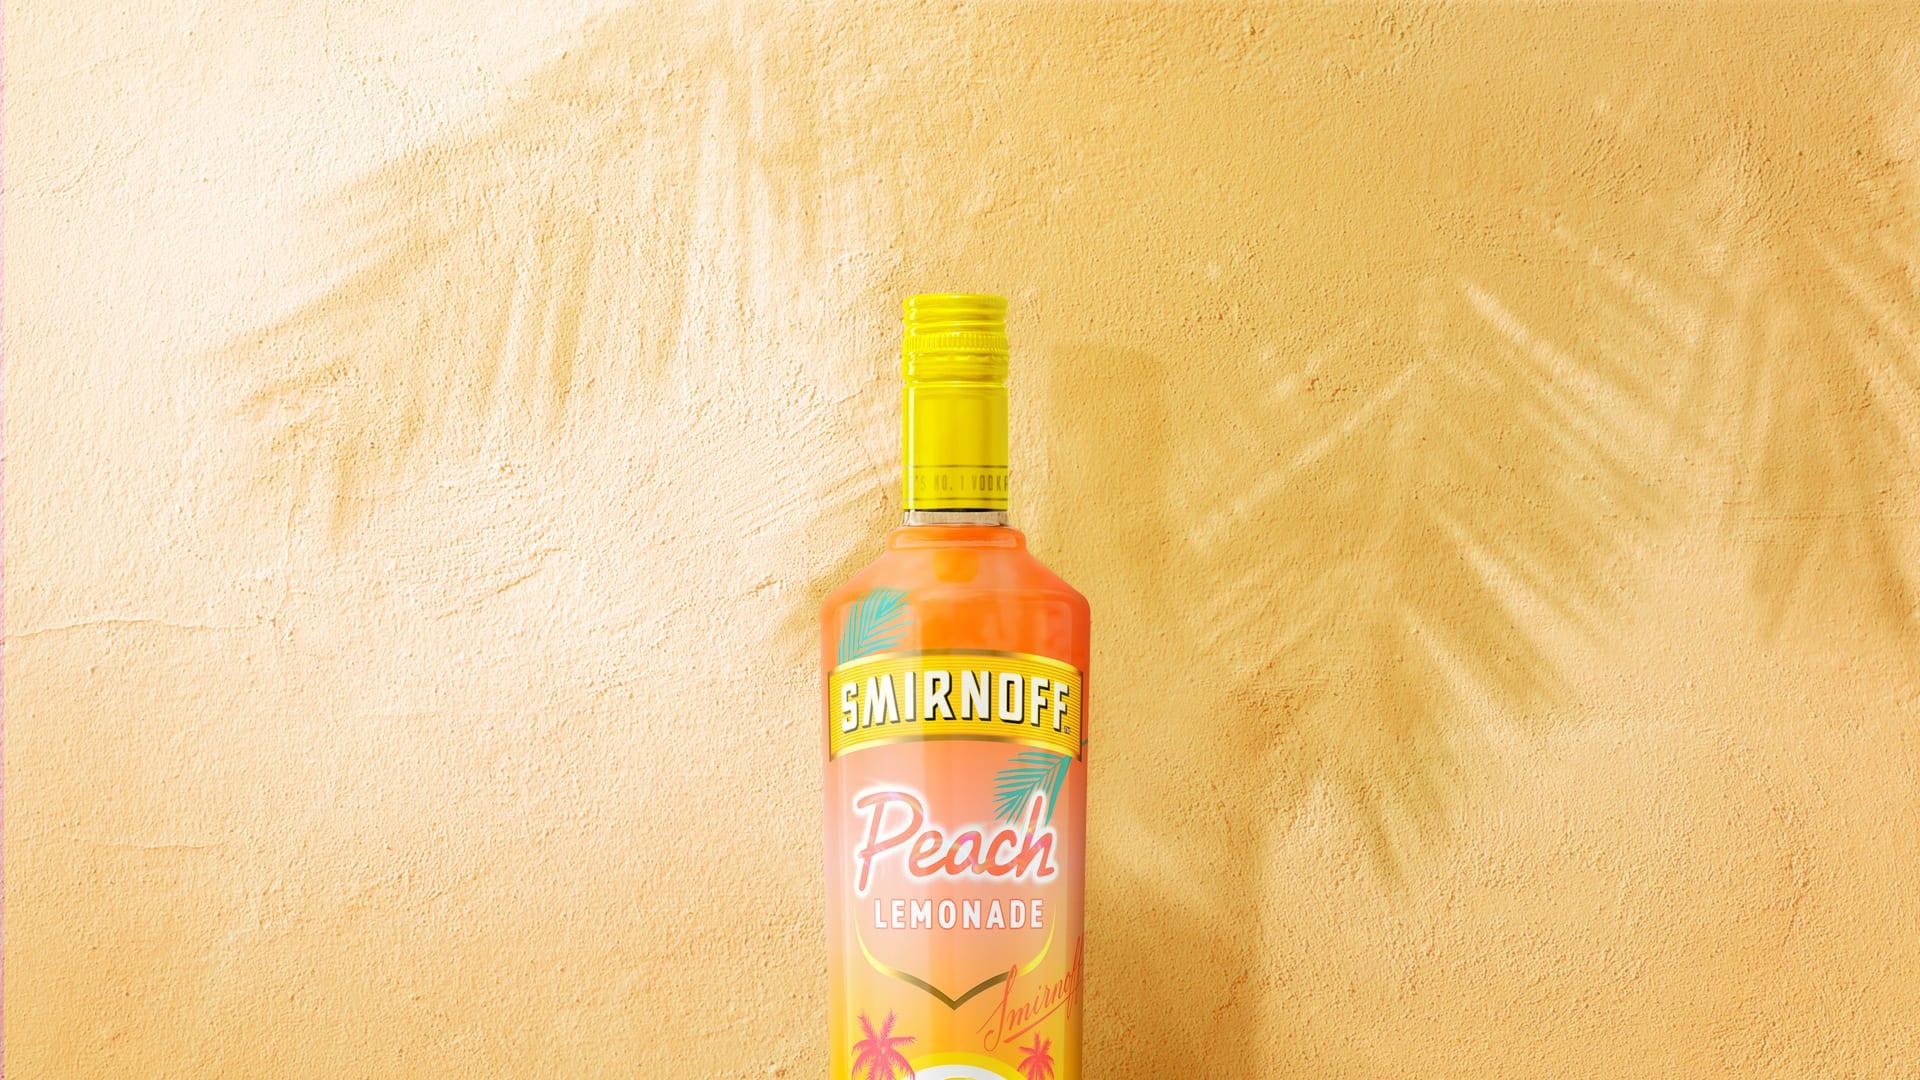 Smirnoff Peach Lemonade on orange background with palm trees